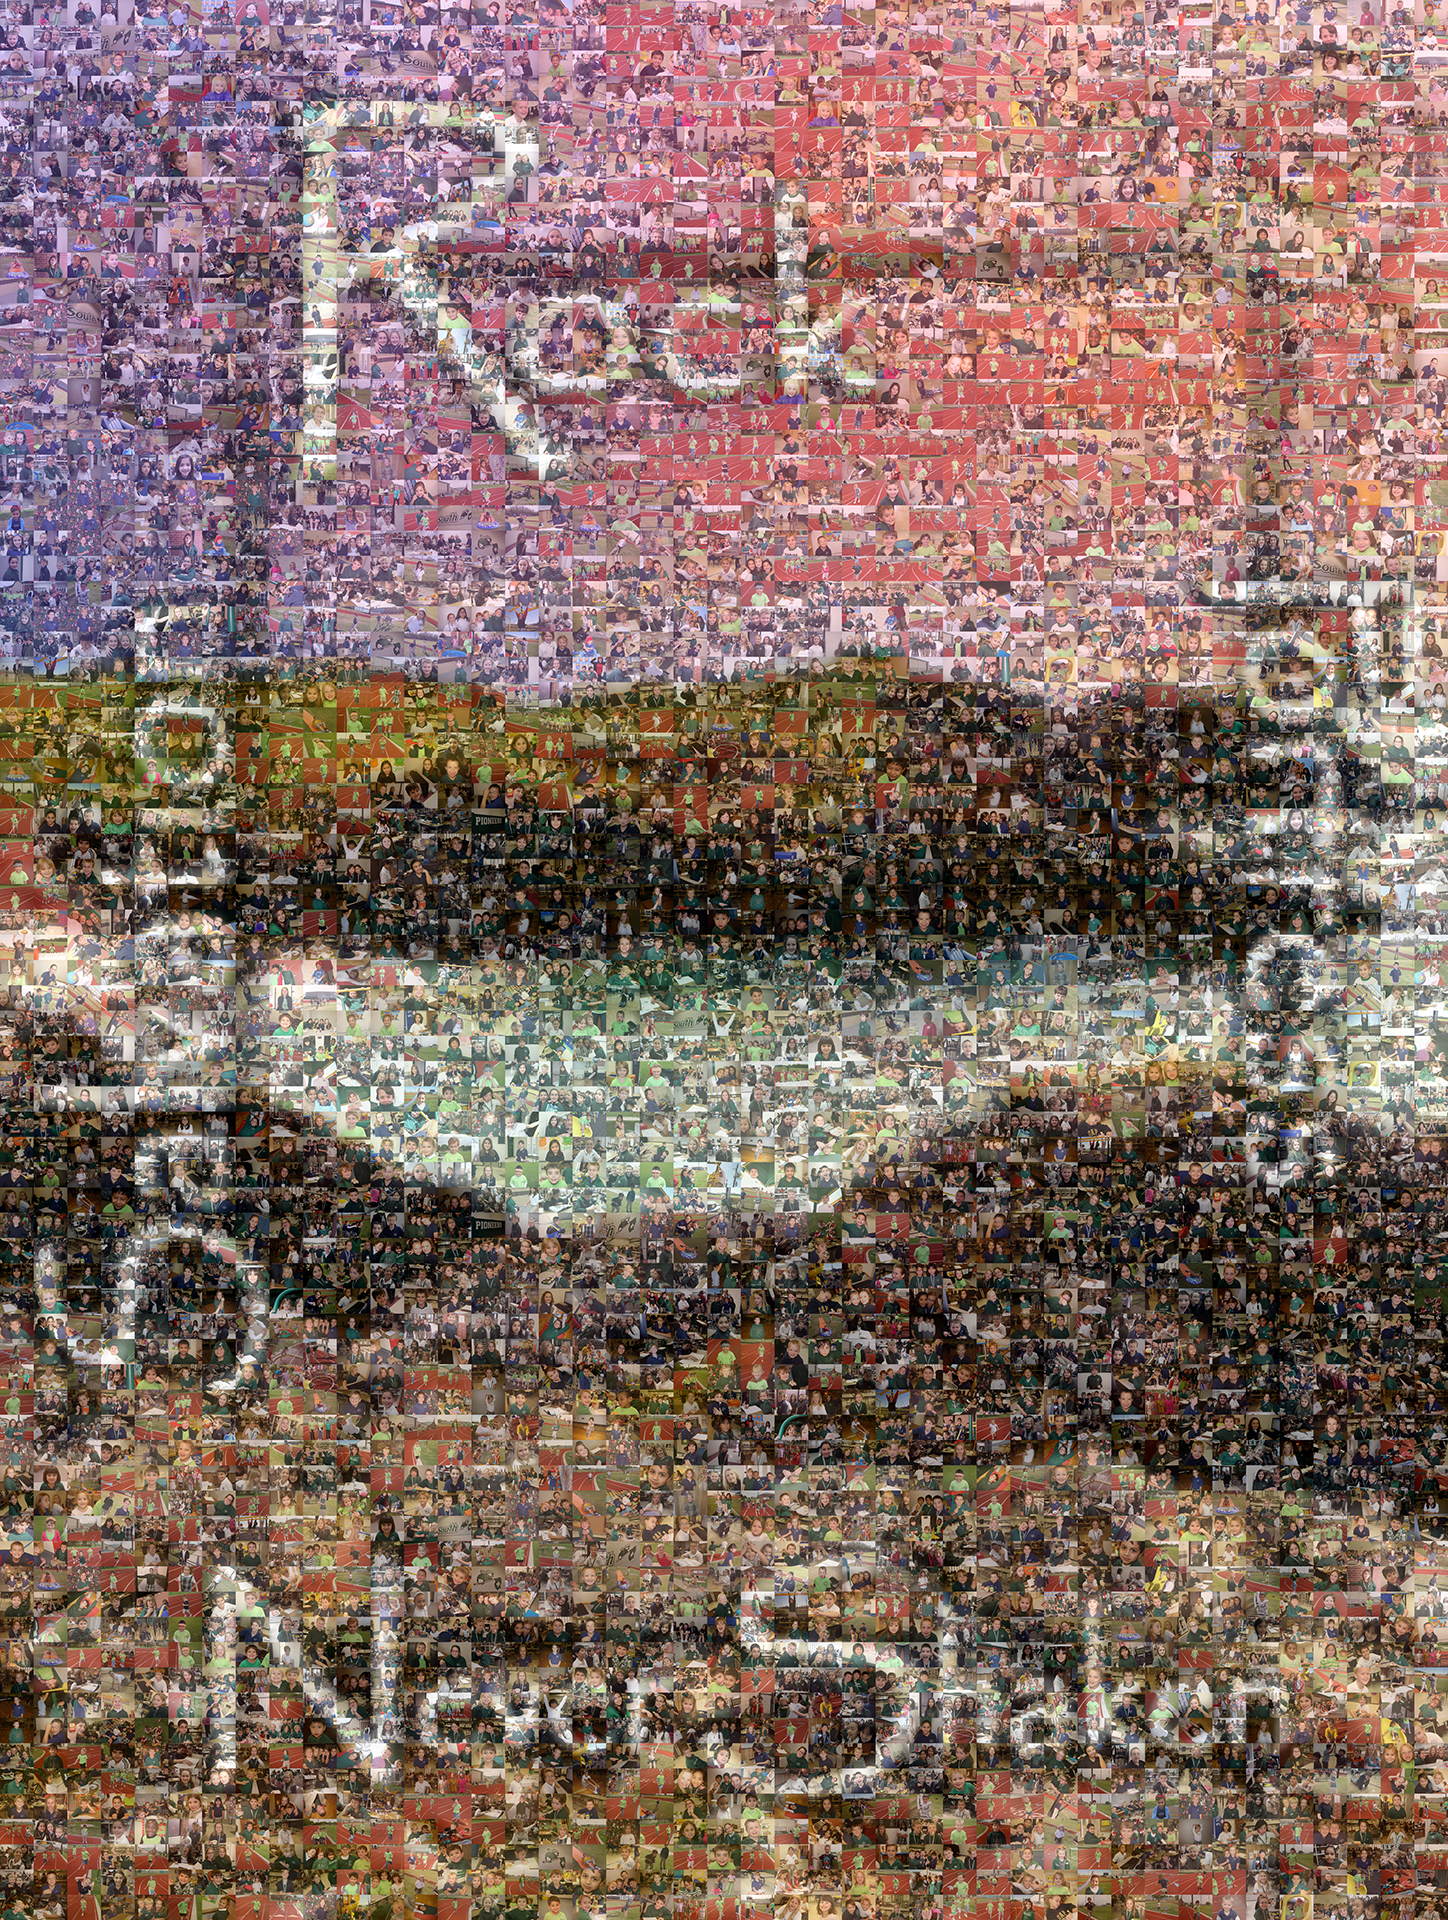 photo mosaic created using 1,215 photos of children